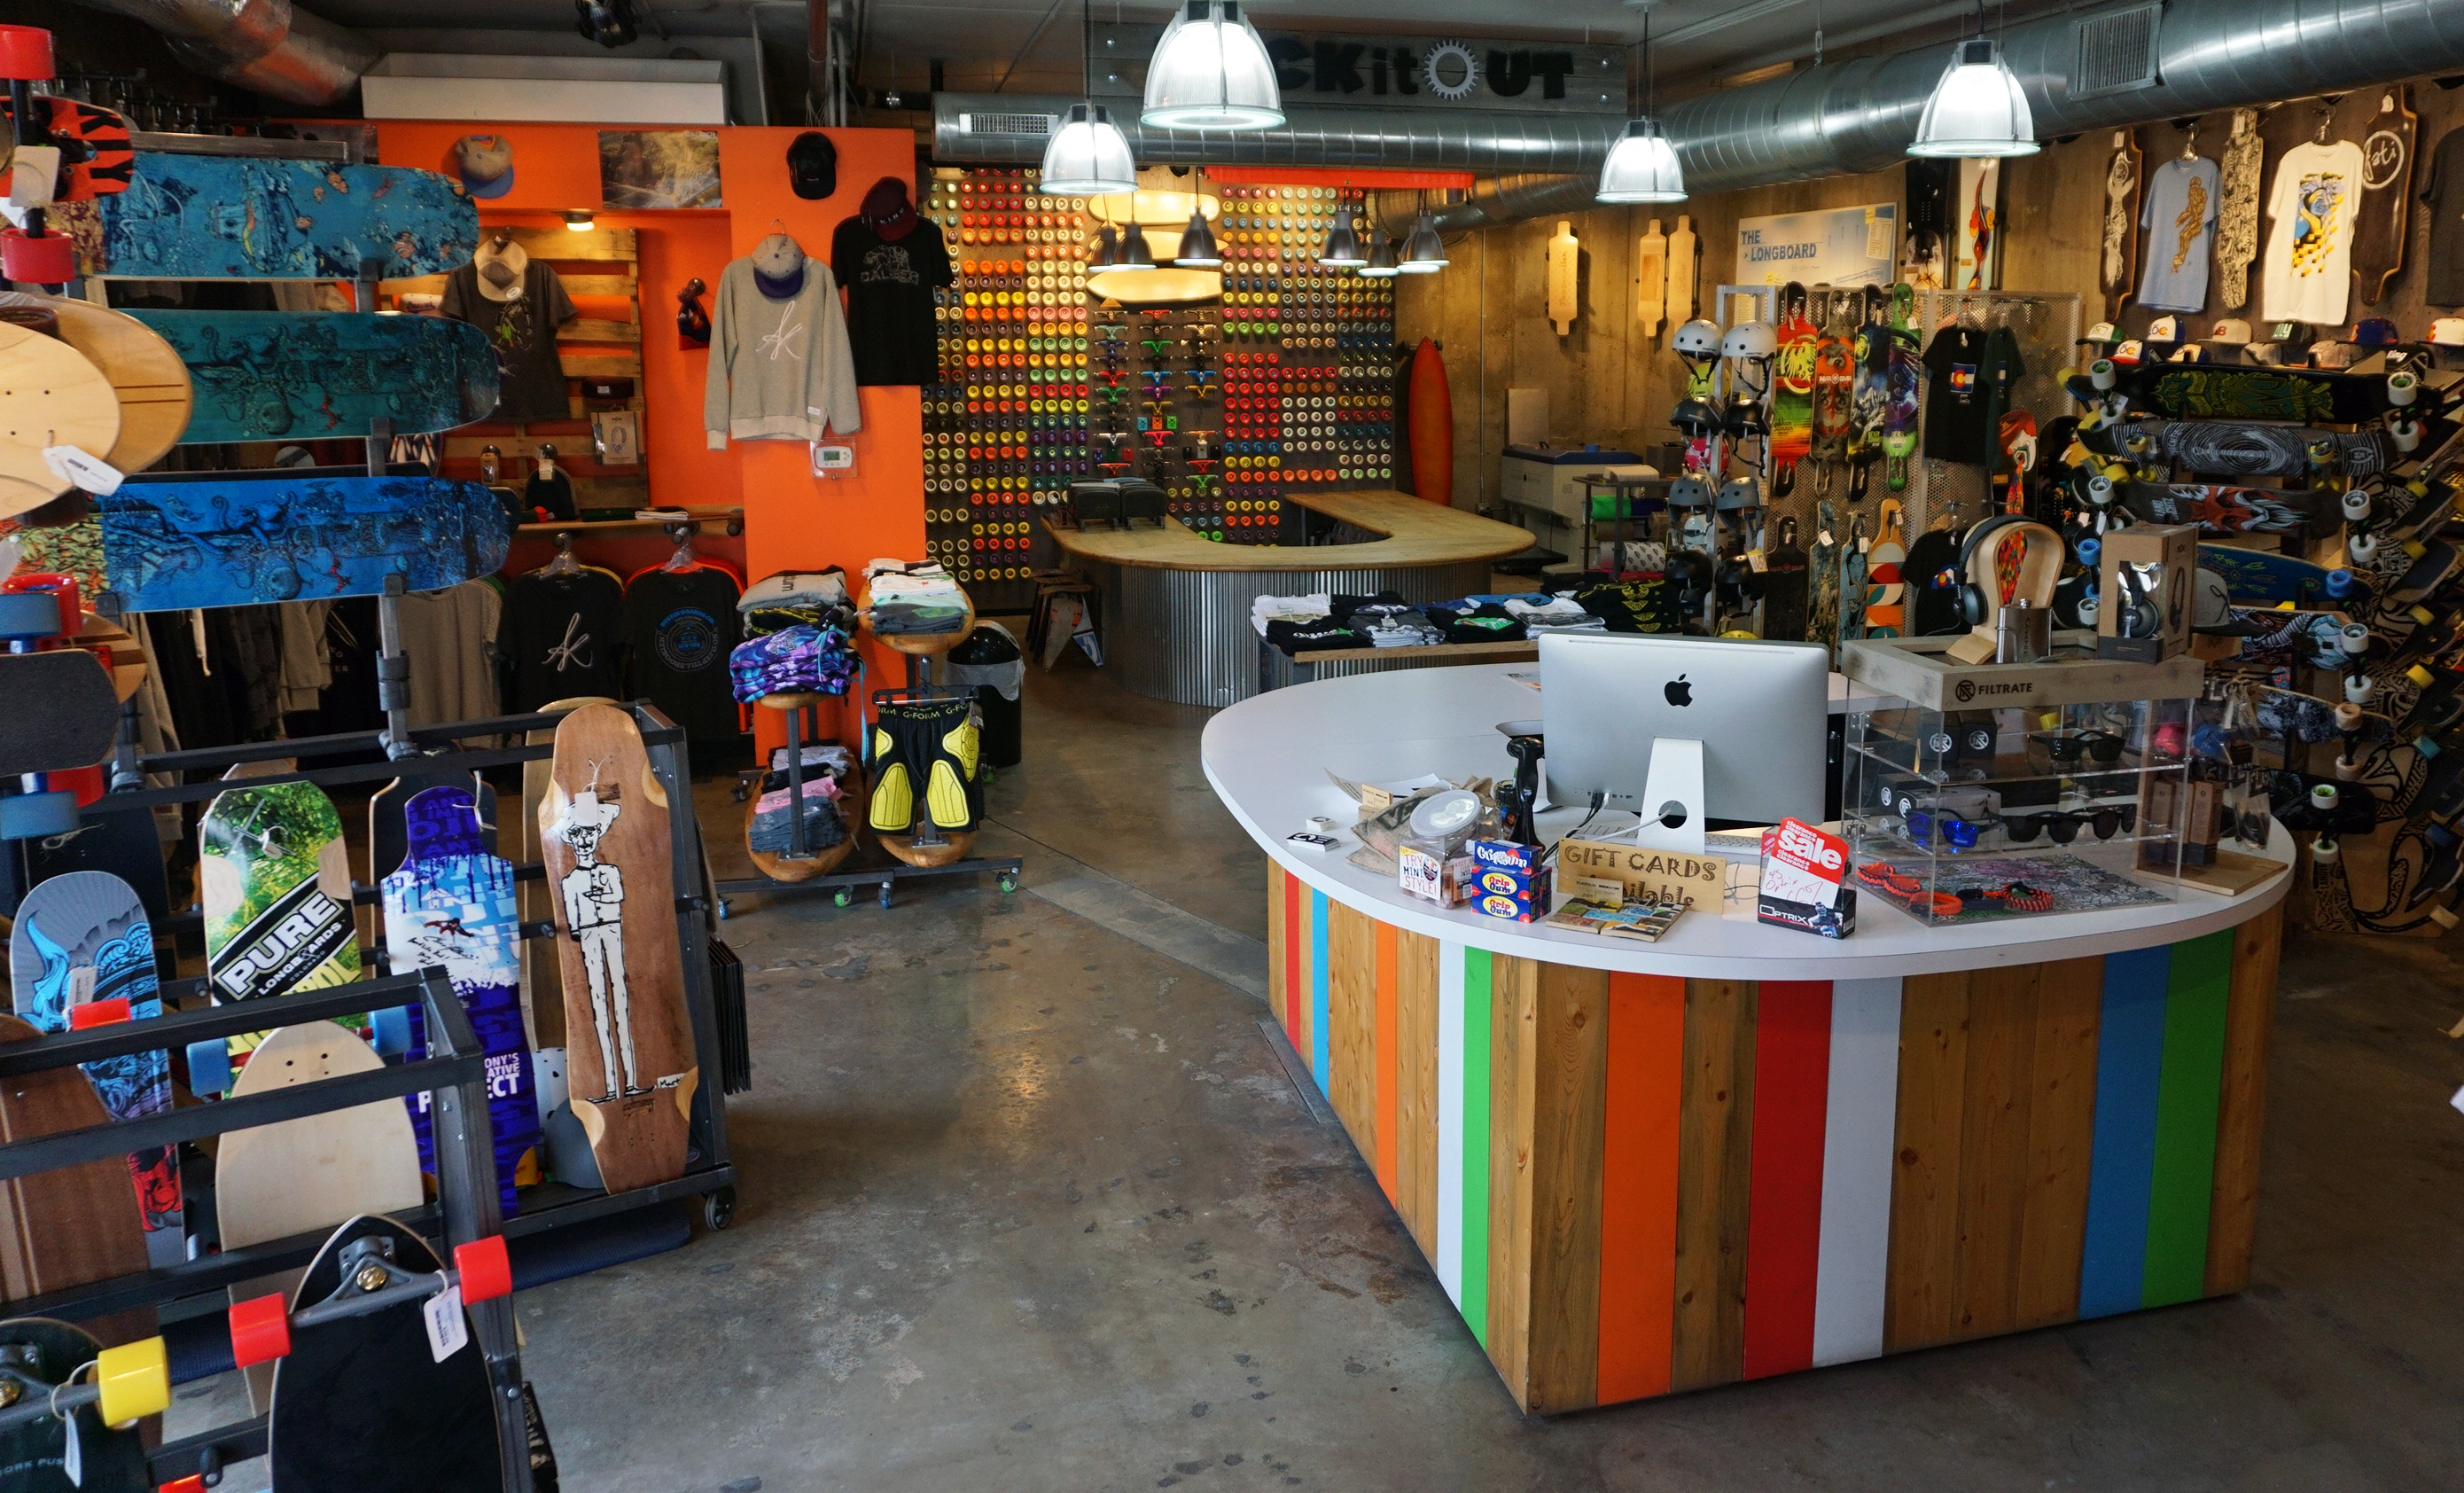 S. Broadway skateboard shop to close - BusinessDen